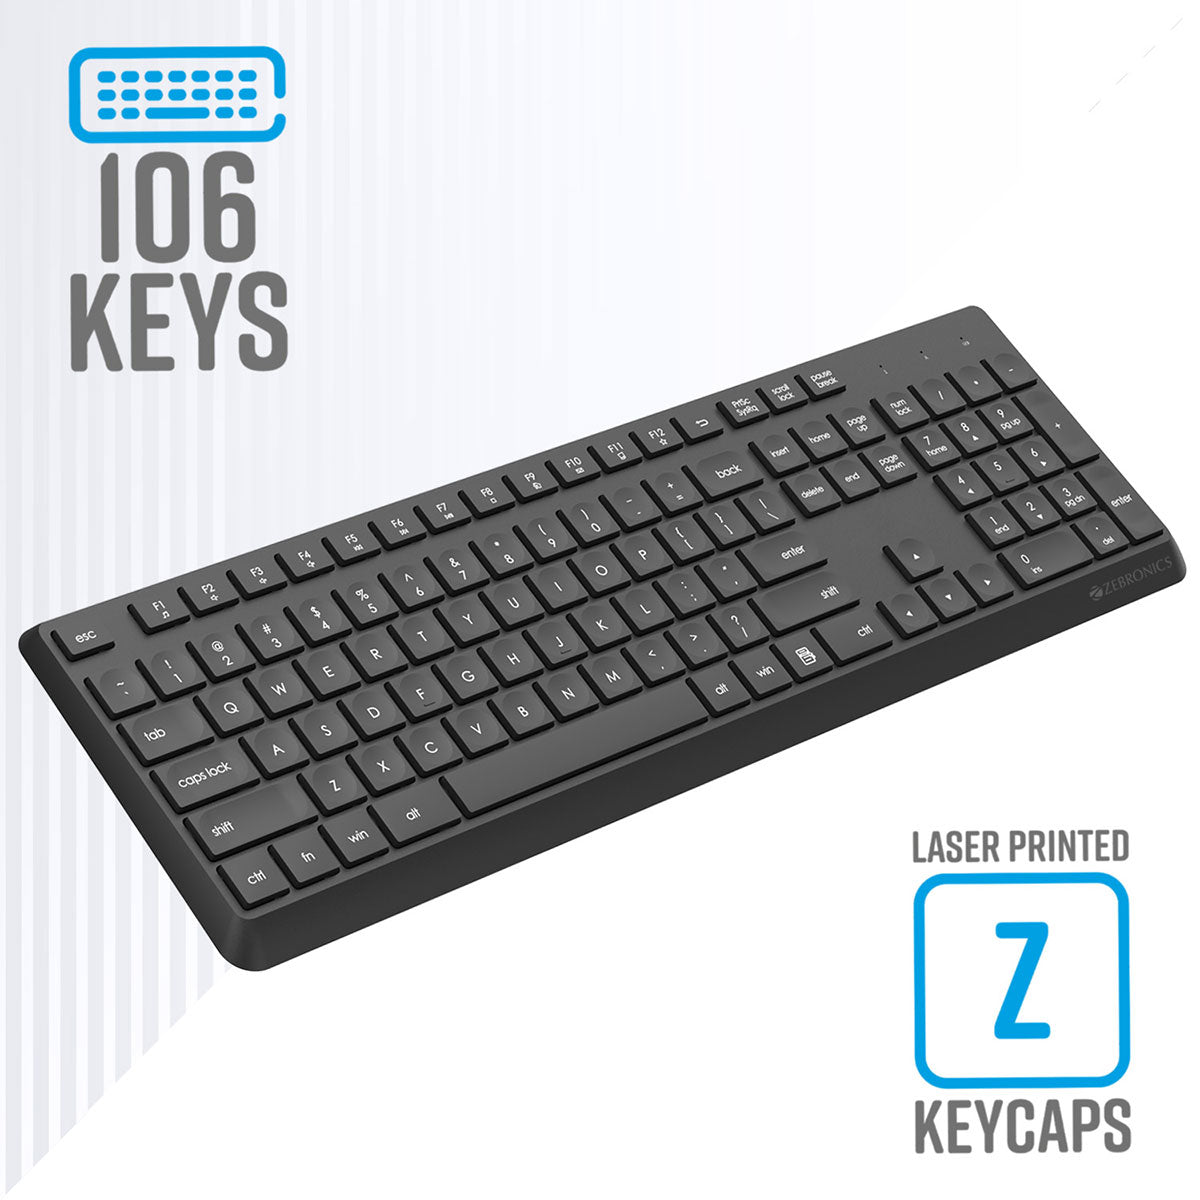 Zeb-Companion 200 - Keyboard and mouse combo - Zebronics